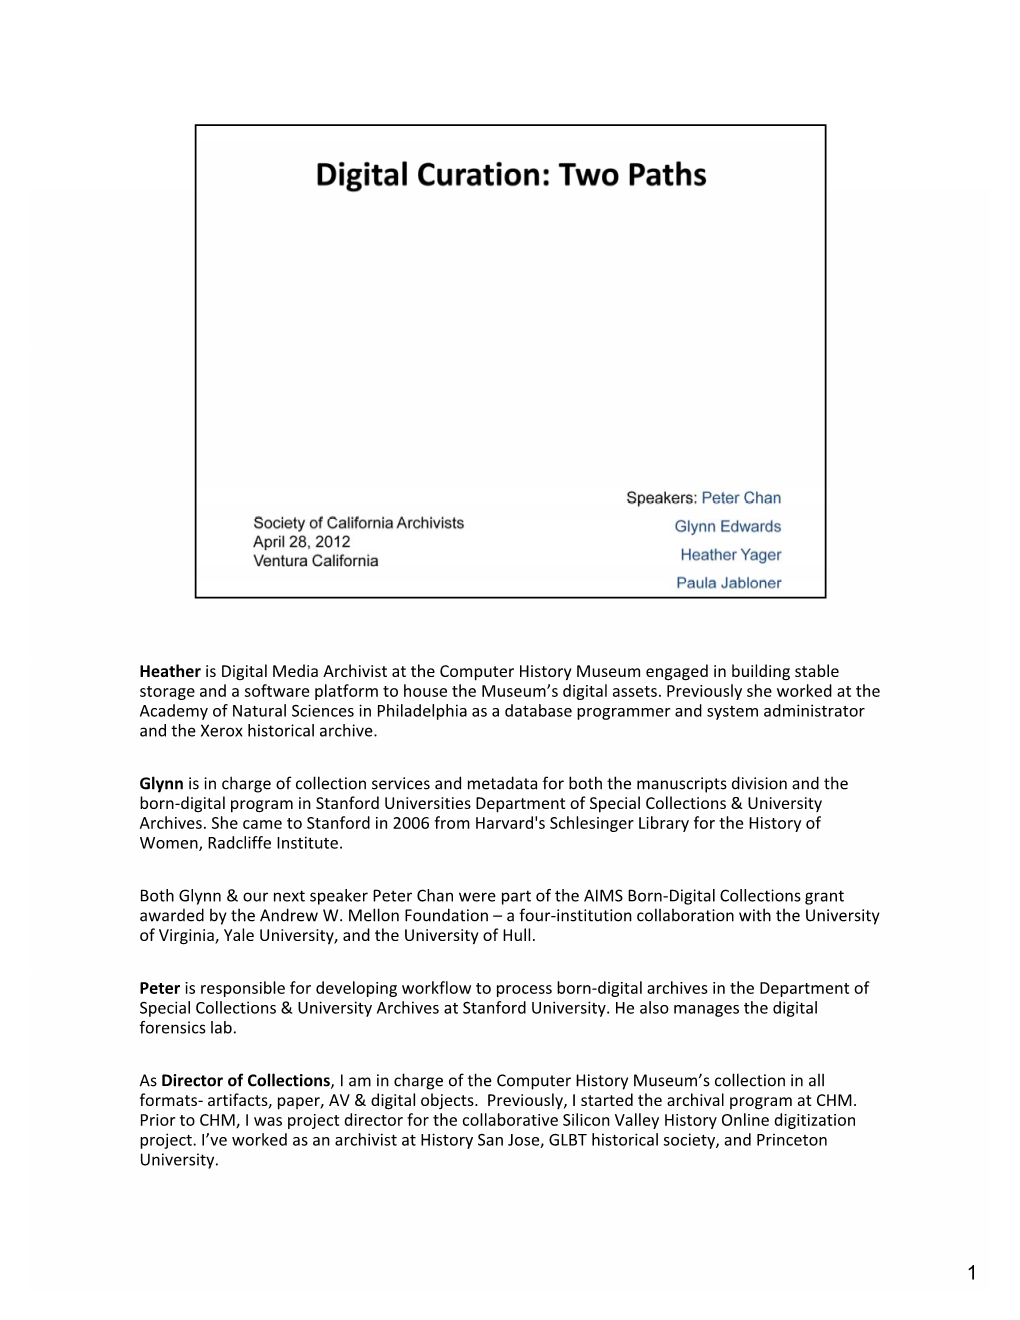 Paula Jabloner, "Digital Curation: Computer History Museum 1" (PDF)